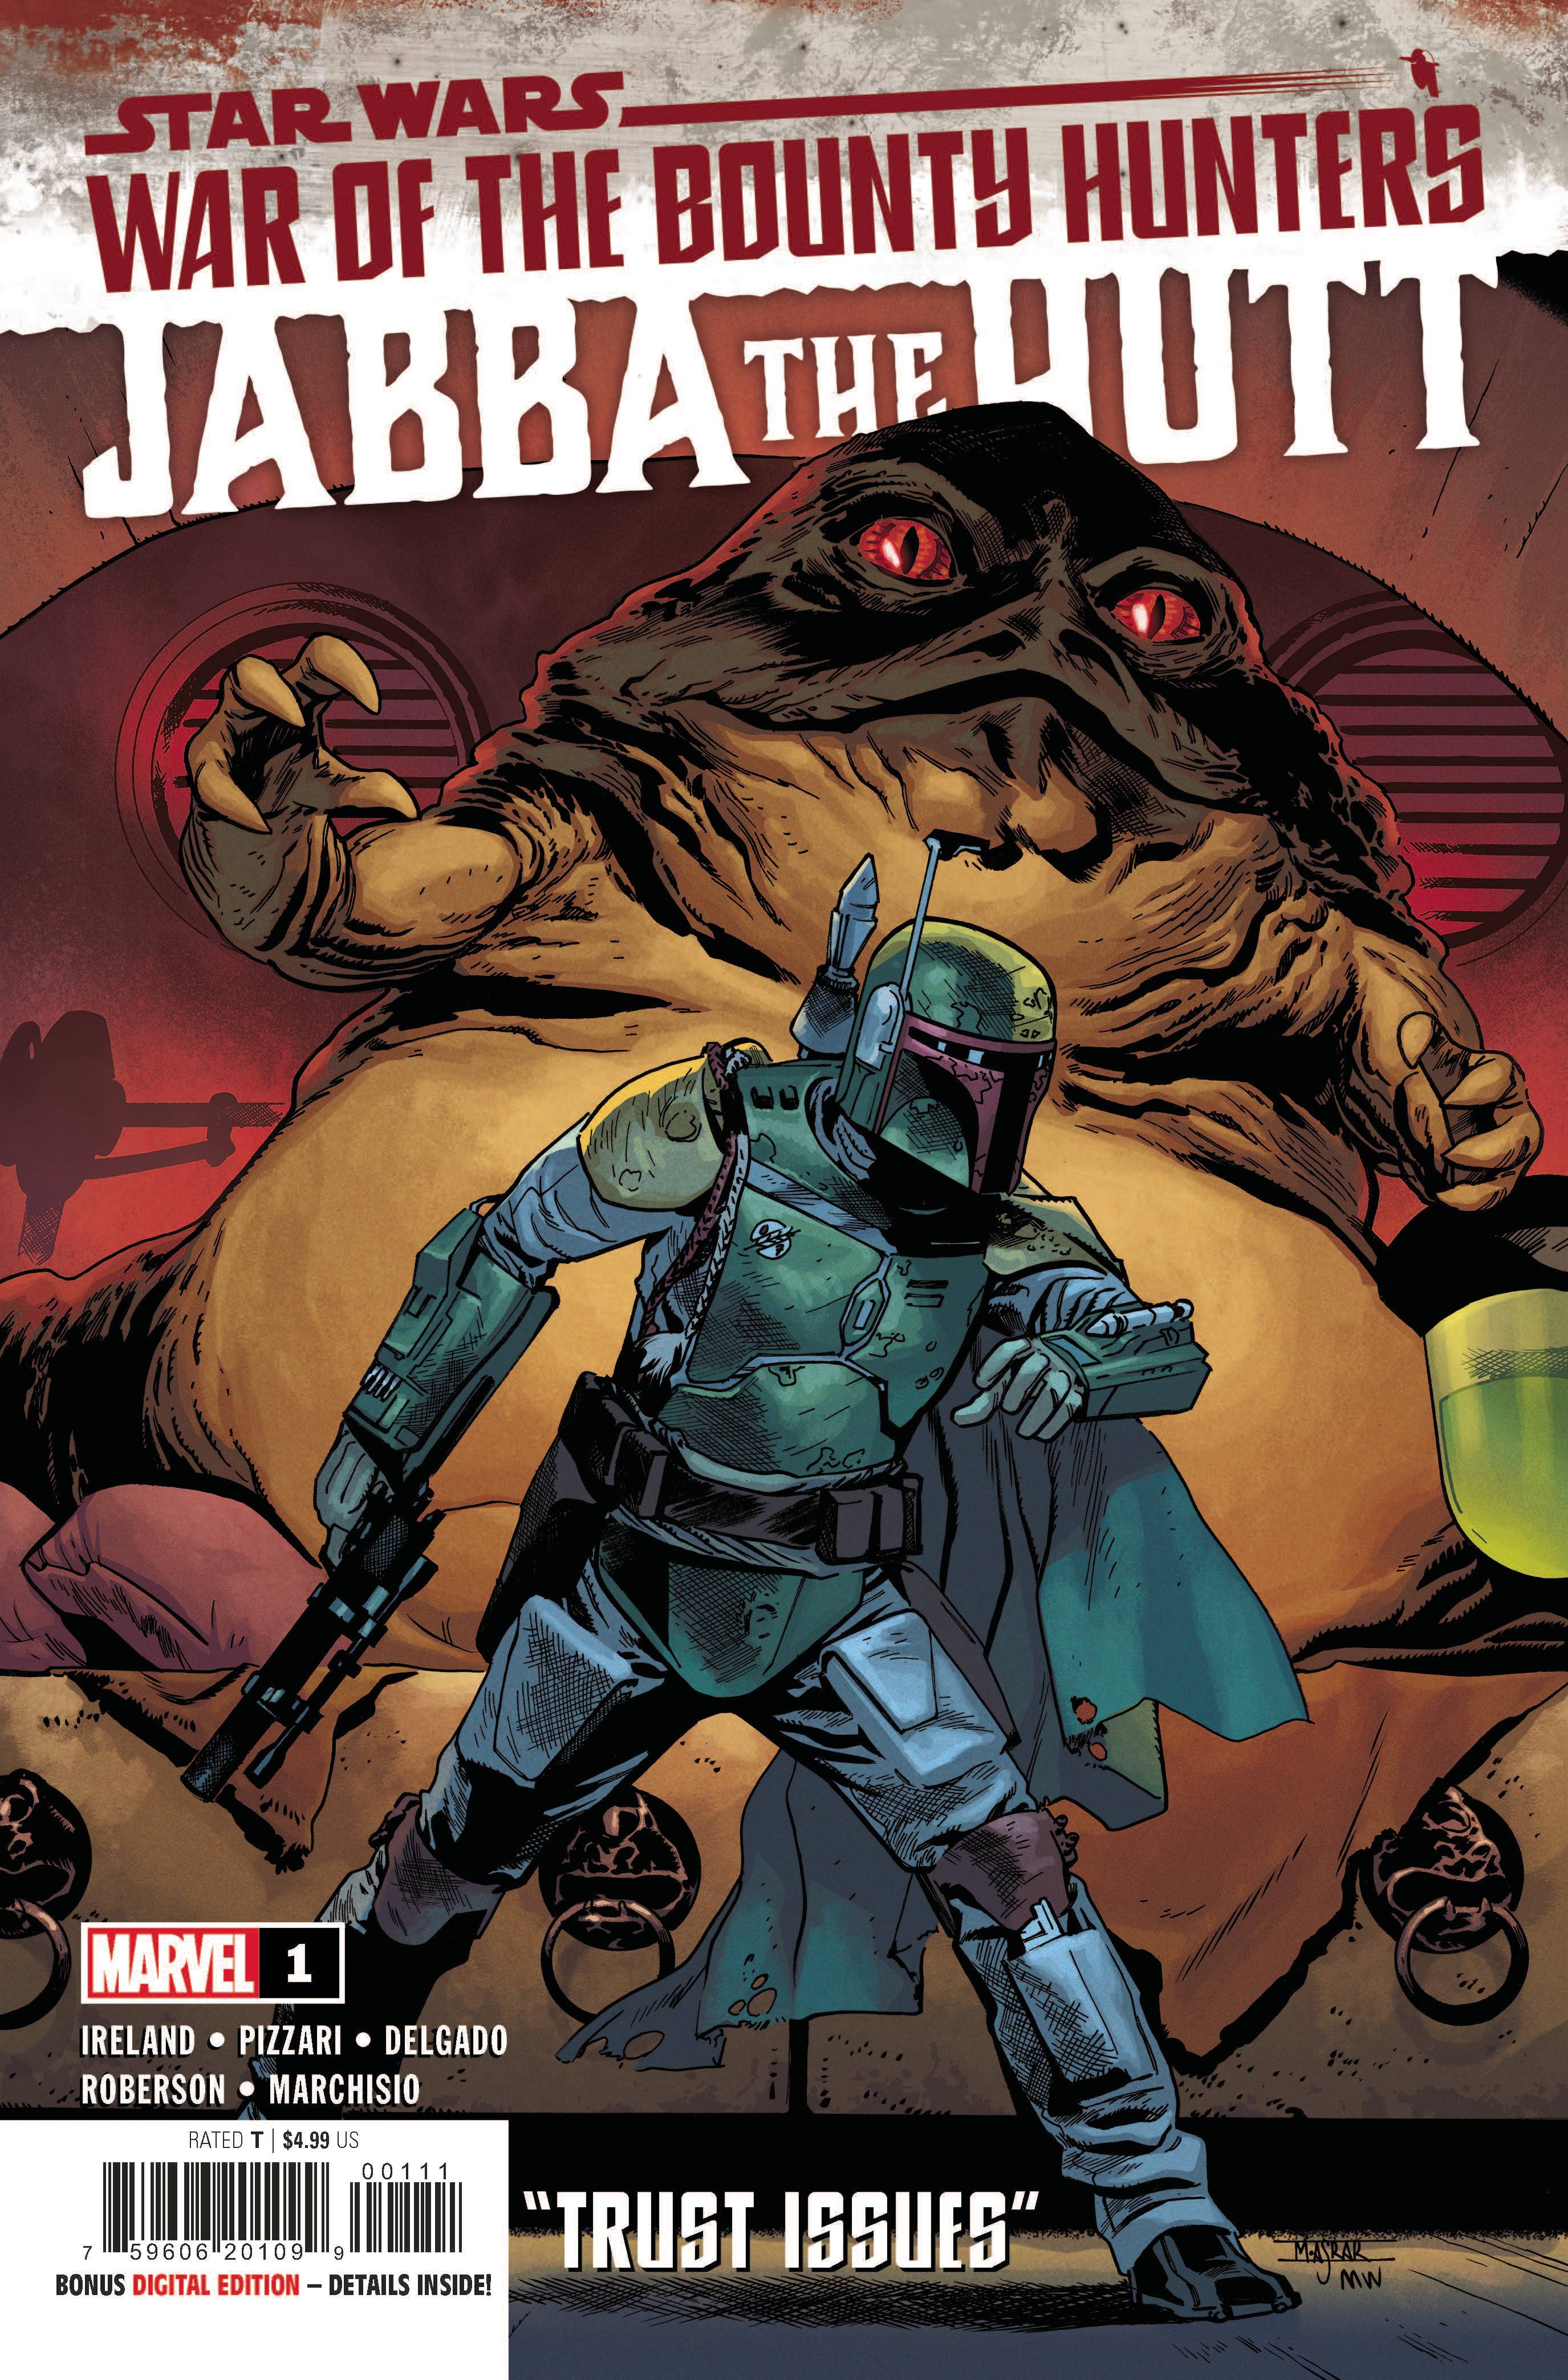 Star Wars War of the Bounty Hunters Jabba The Hutt #1